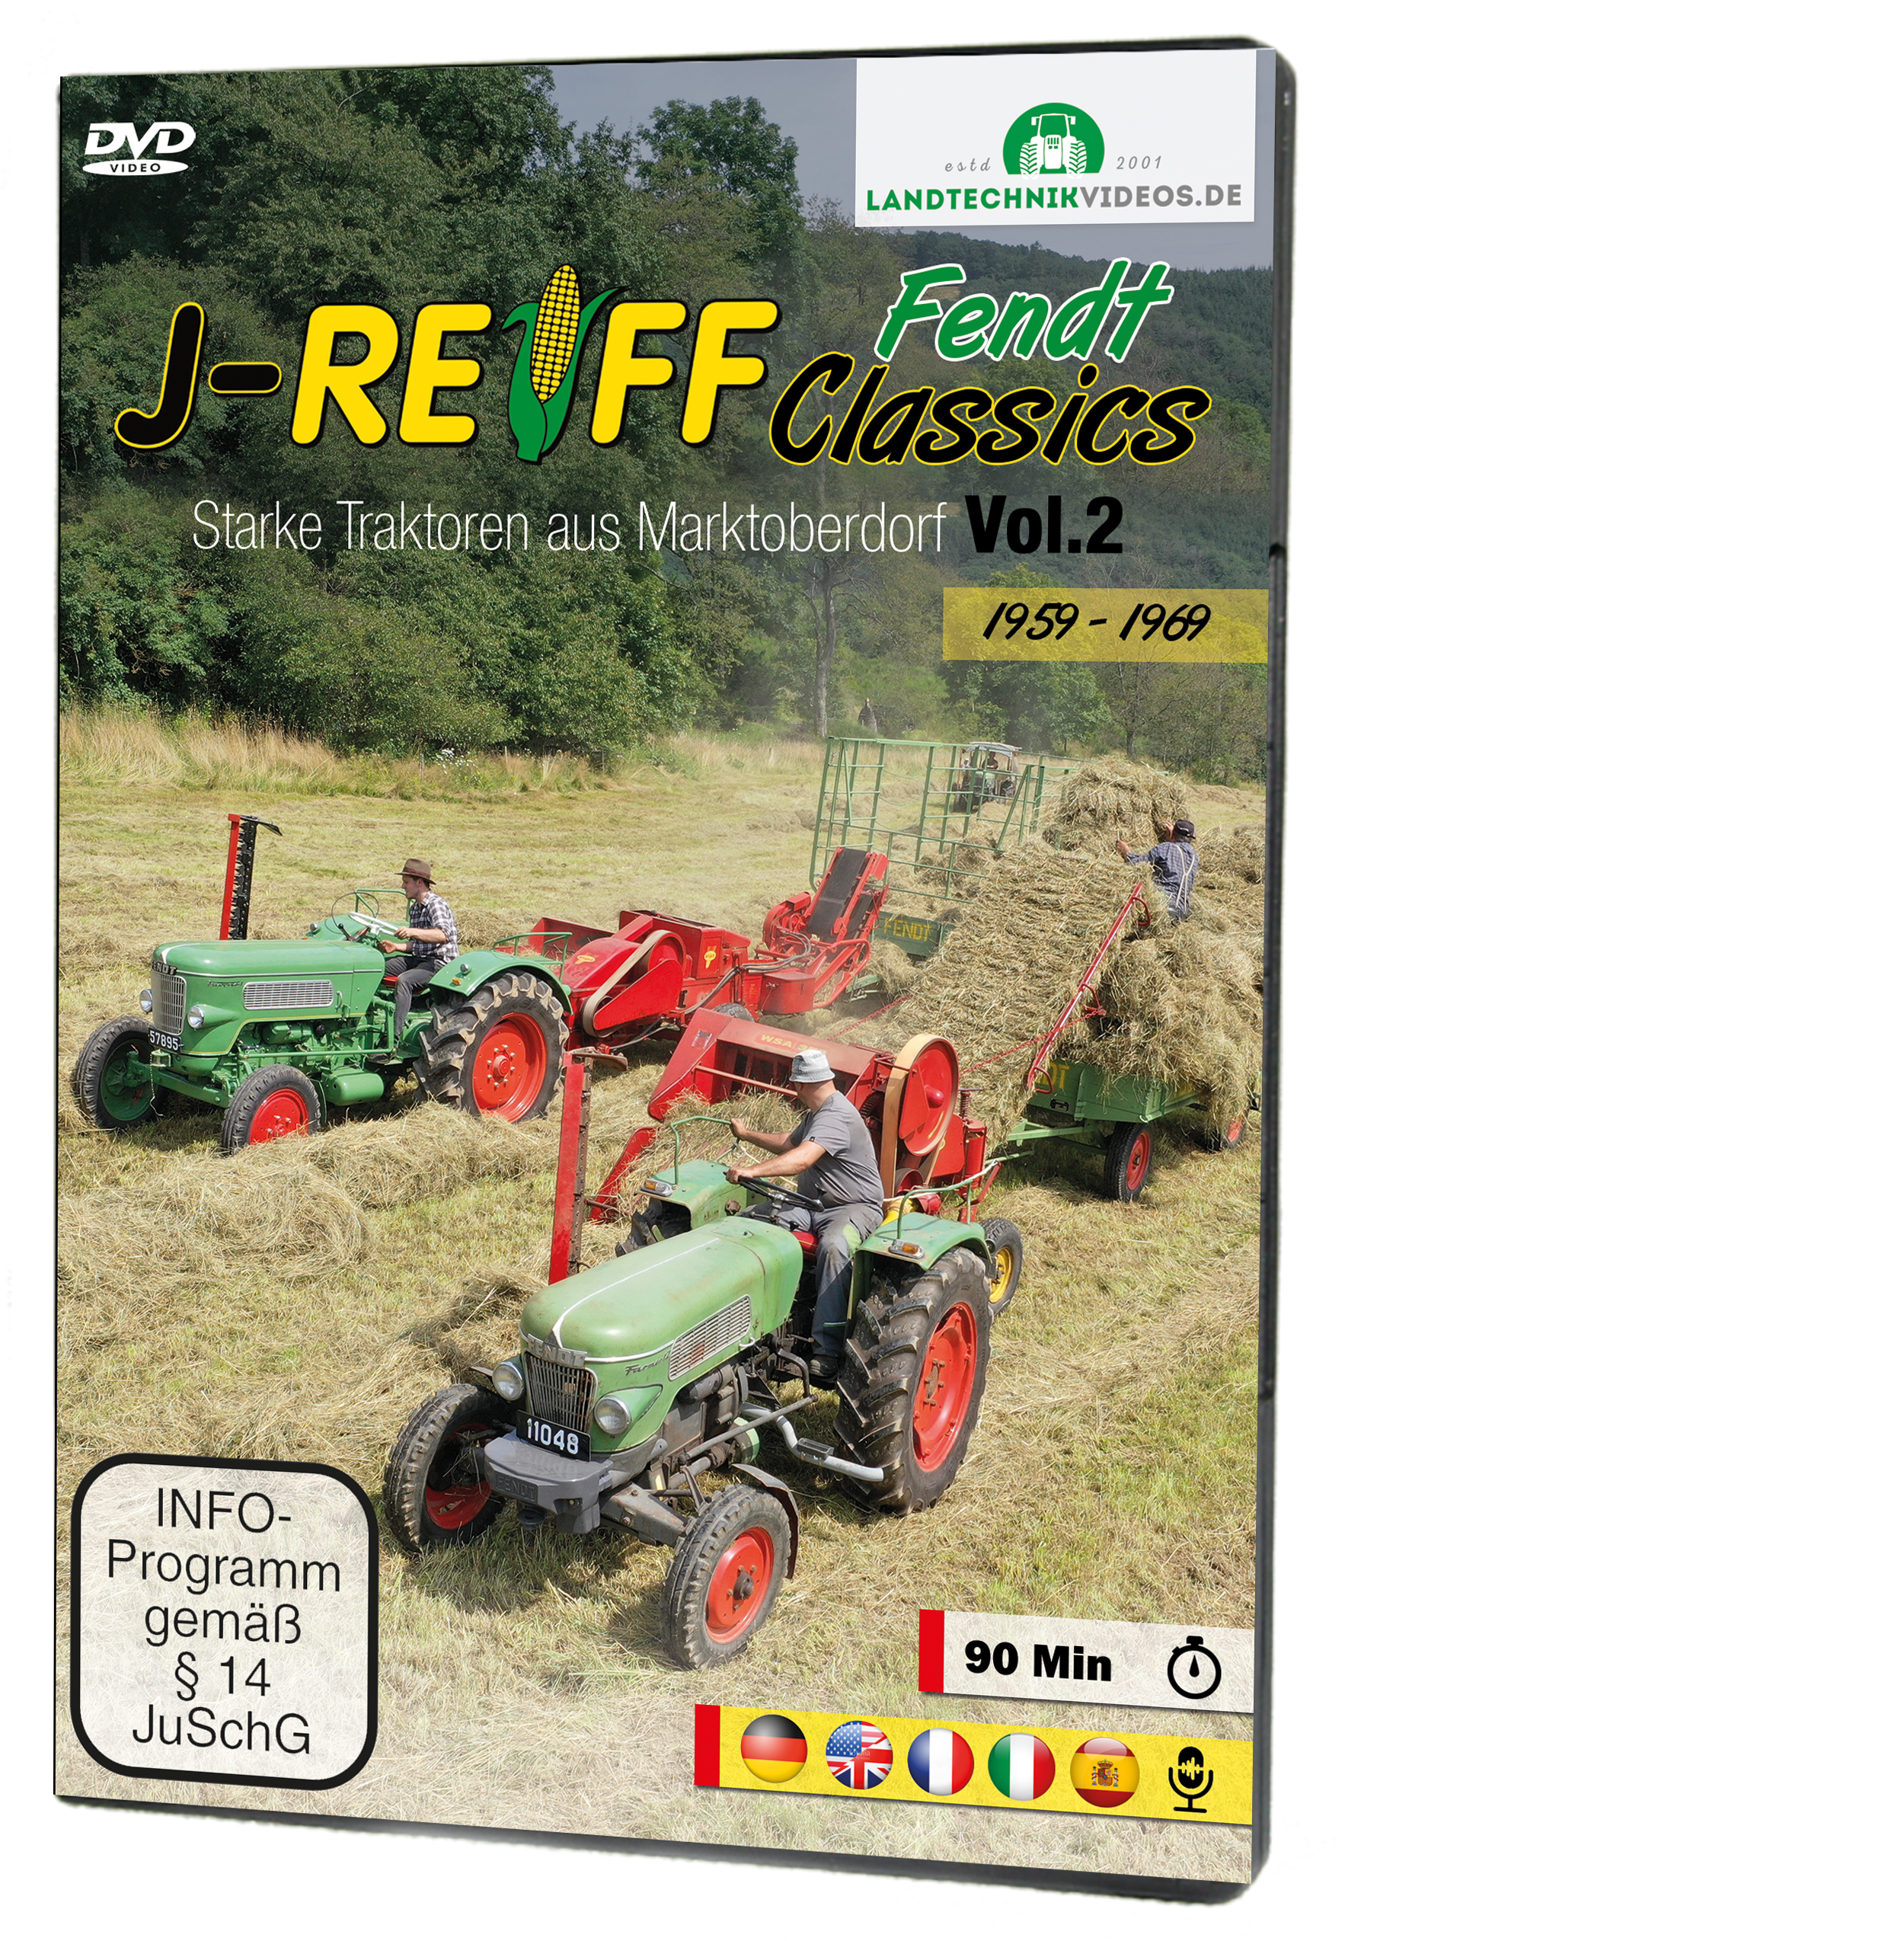 J-Reiff - J-Reiff Fendt Classics Vol. 2 als DVD